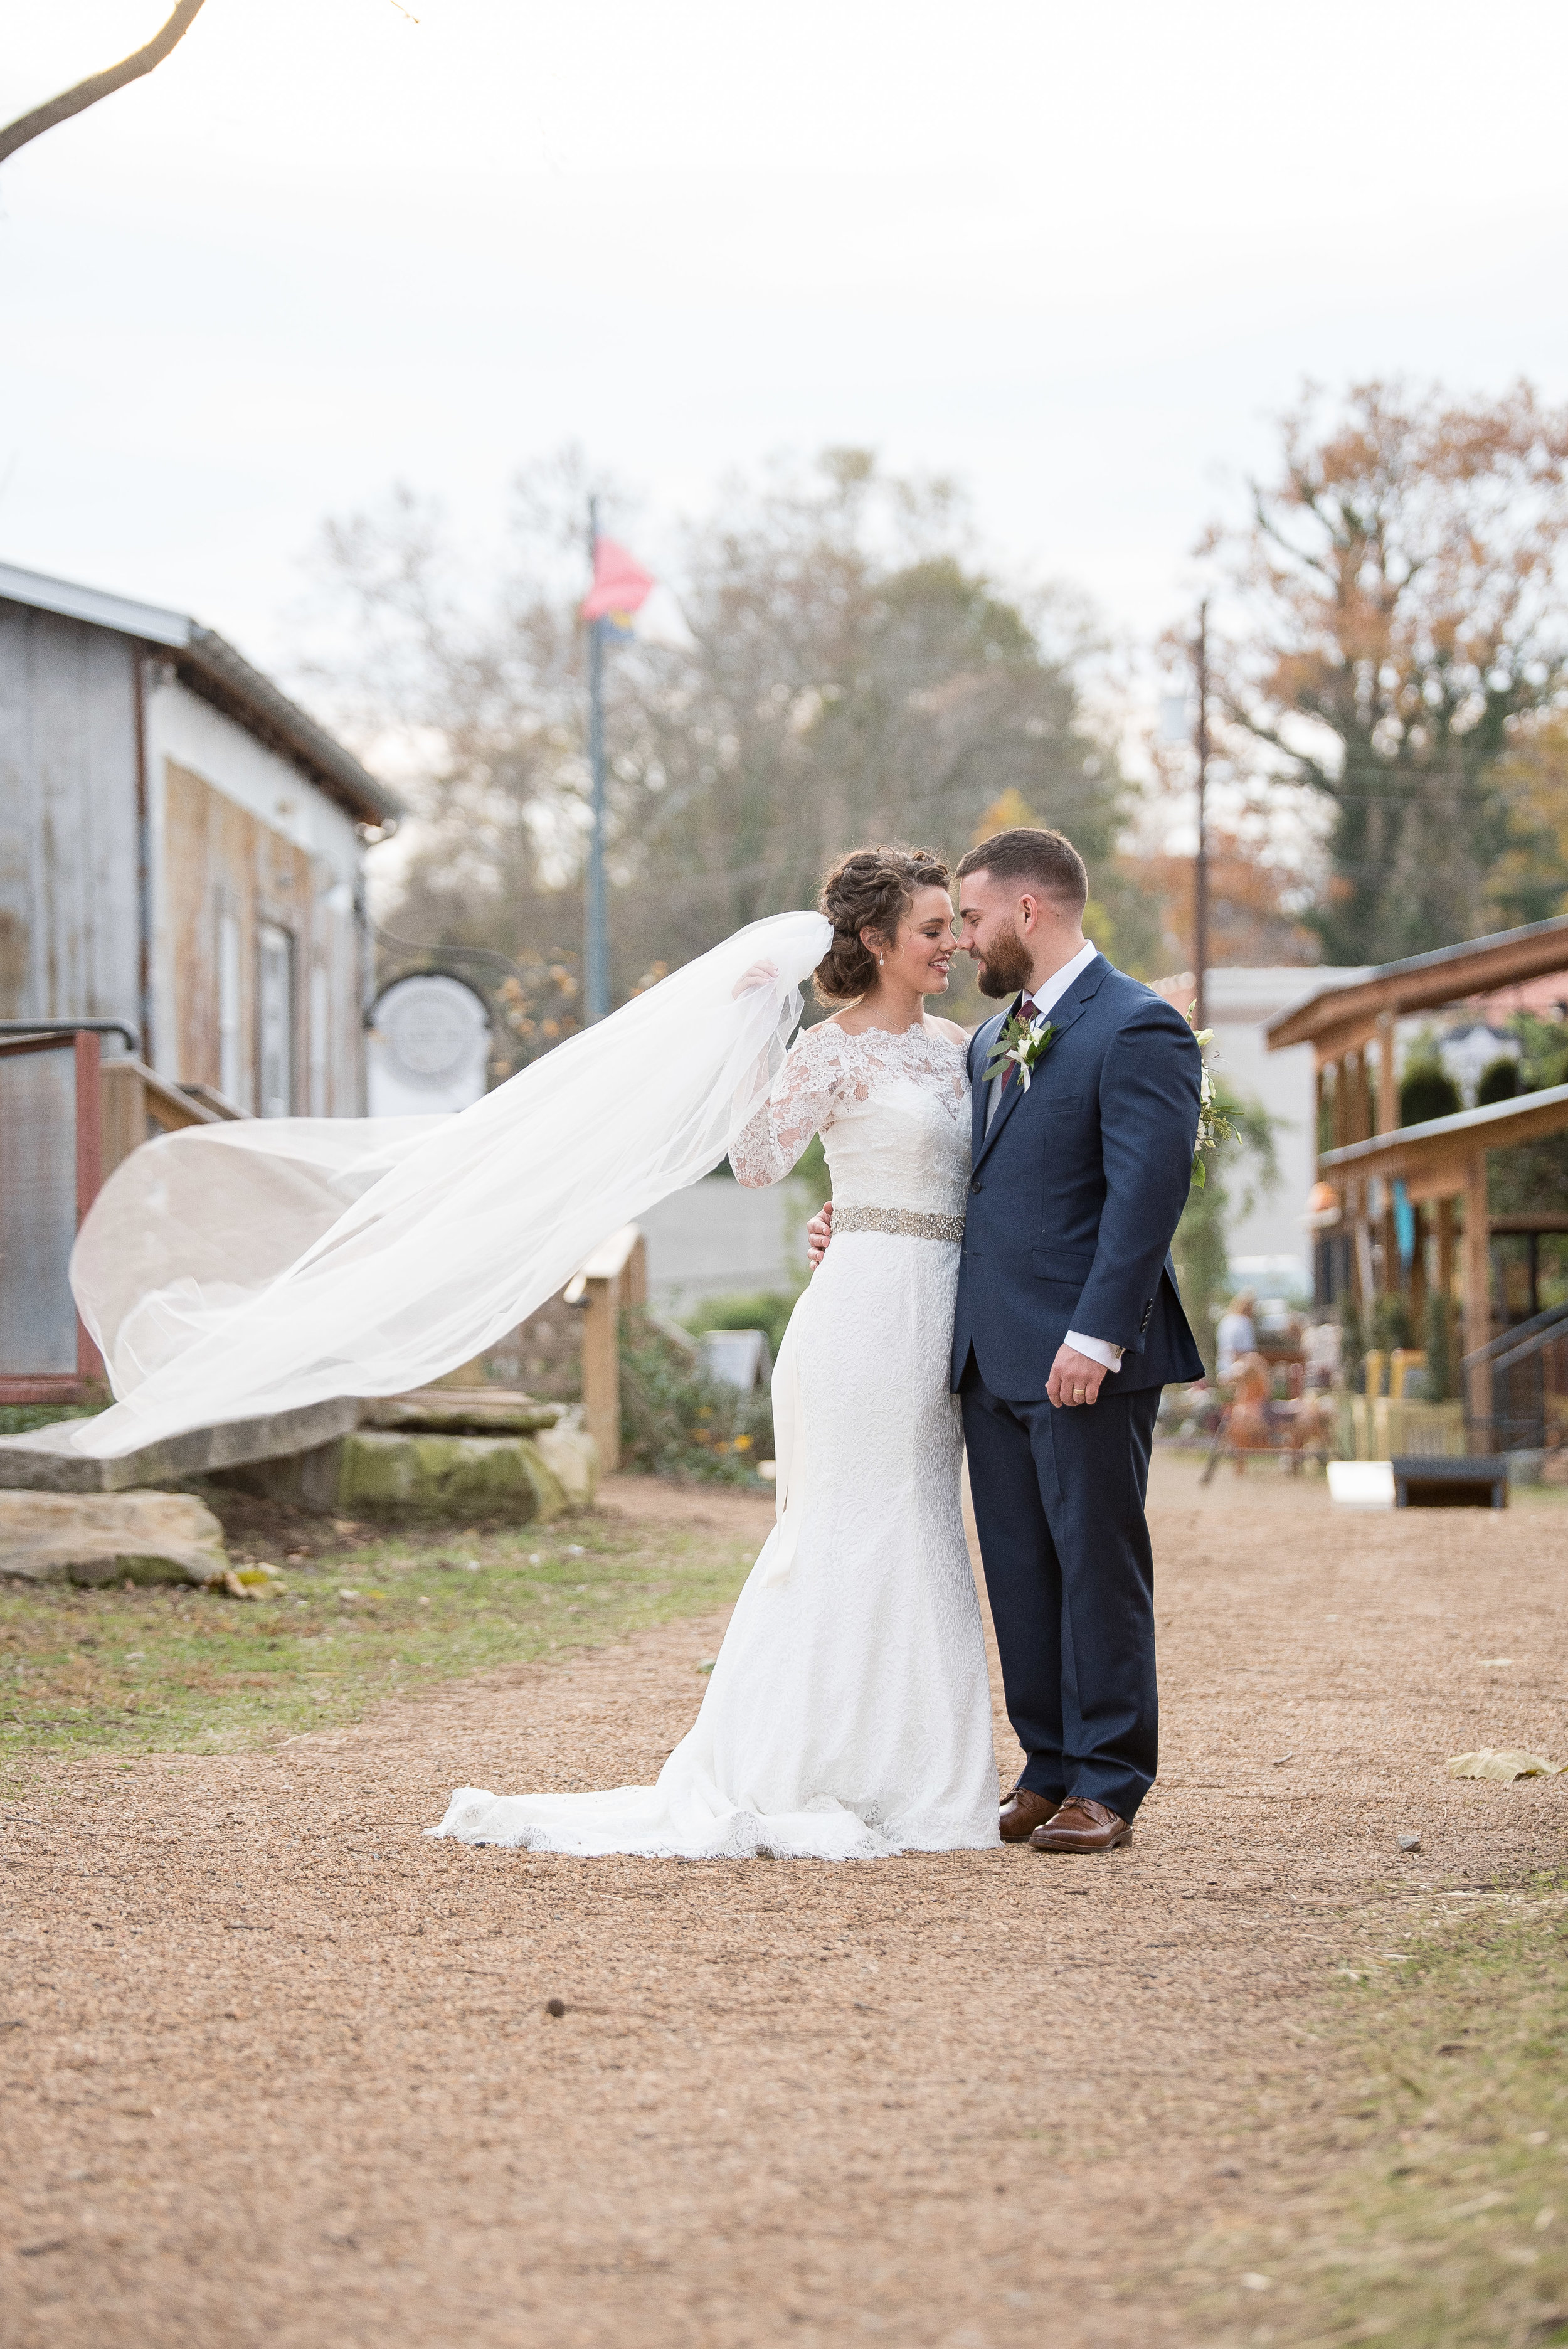 The Roller Mill Events - Winston Salem Weddings - NC Weddings - High Point NC Weddings - Winston Salem Venue - Yasmin Leonard Photography-53.jpg